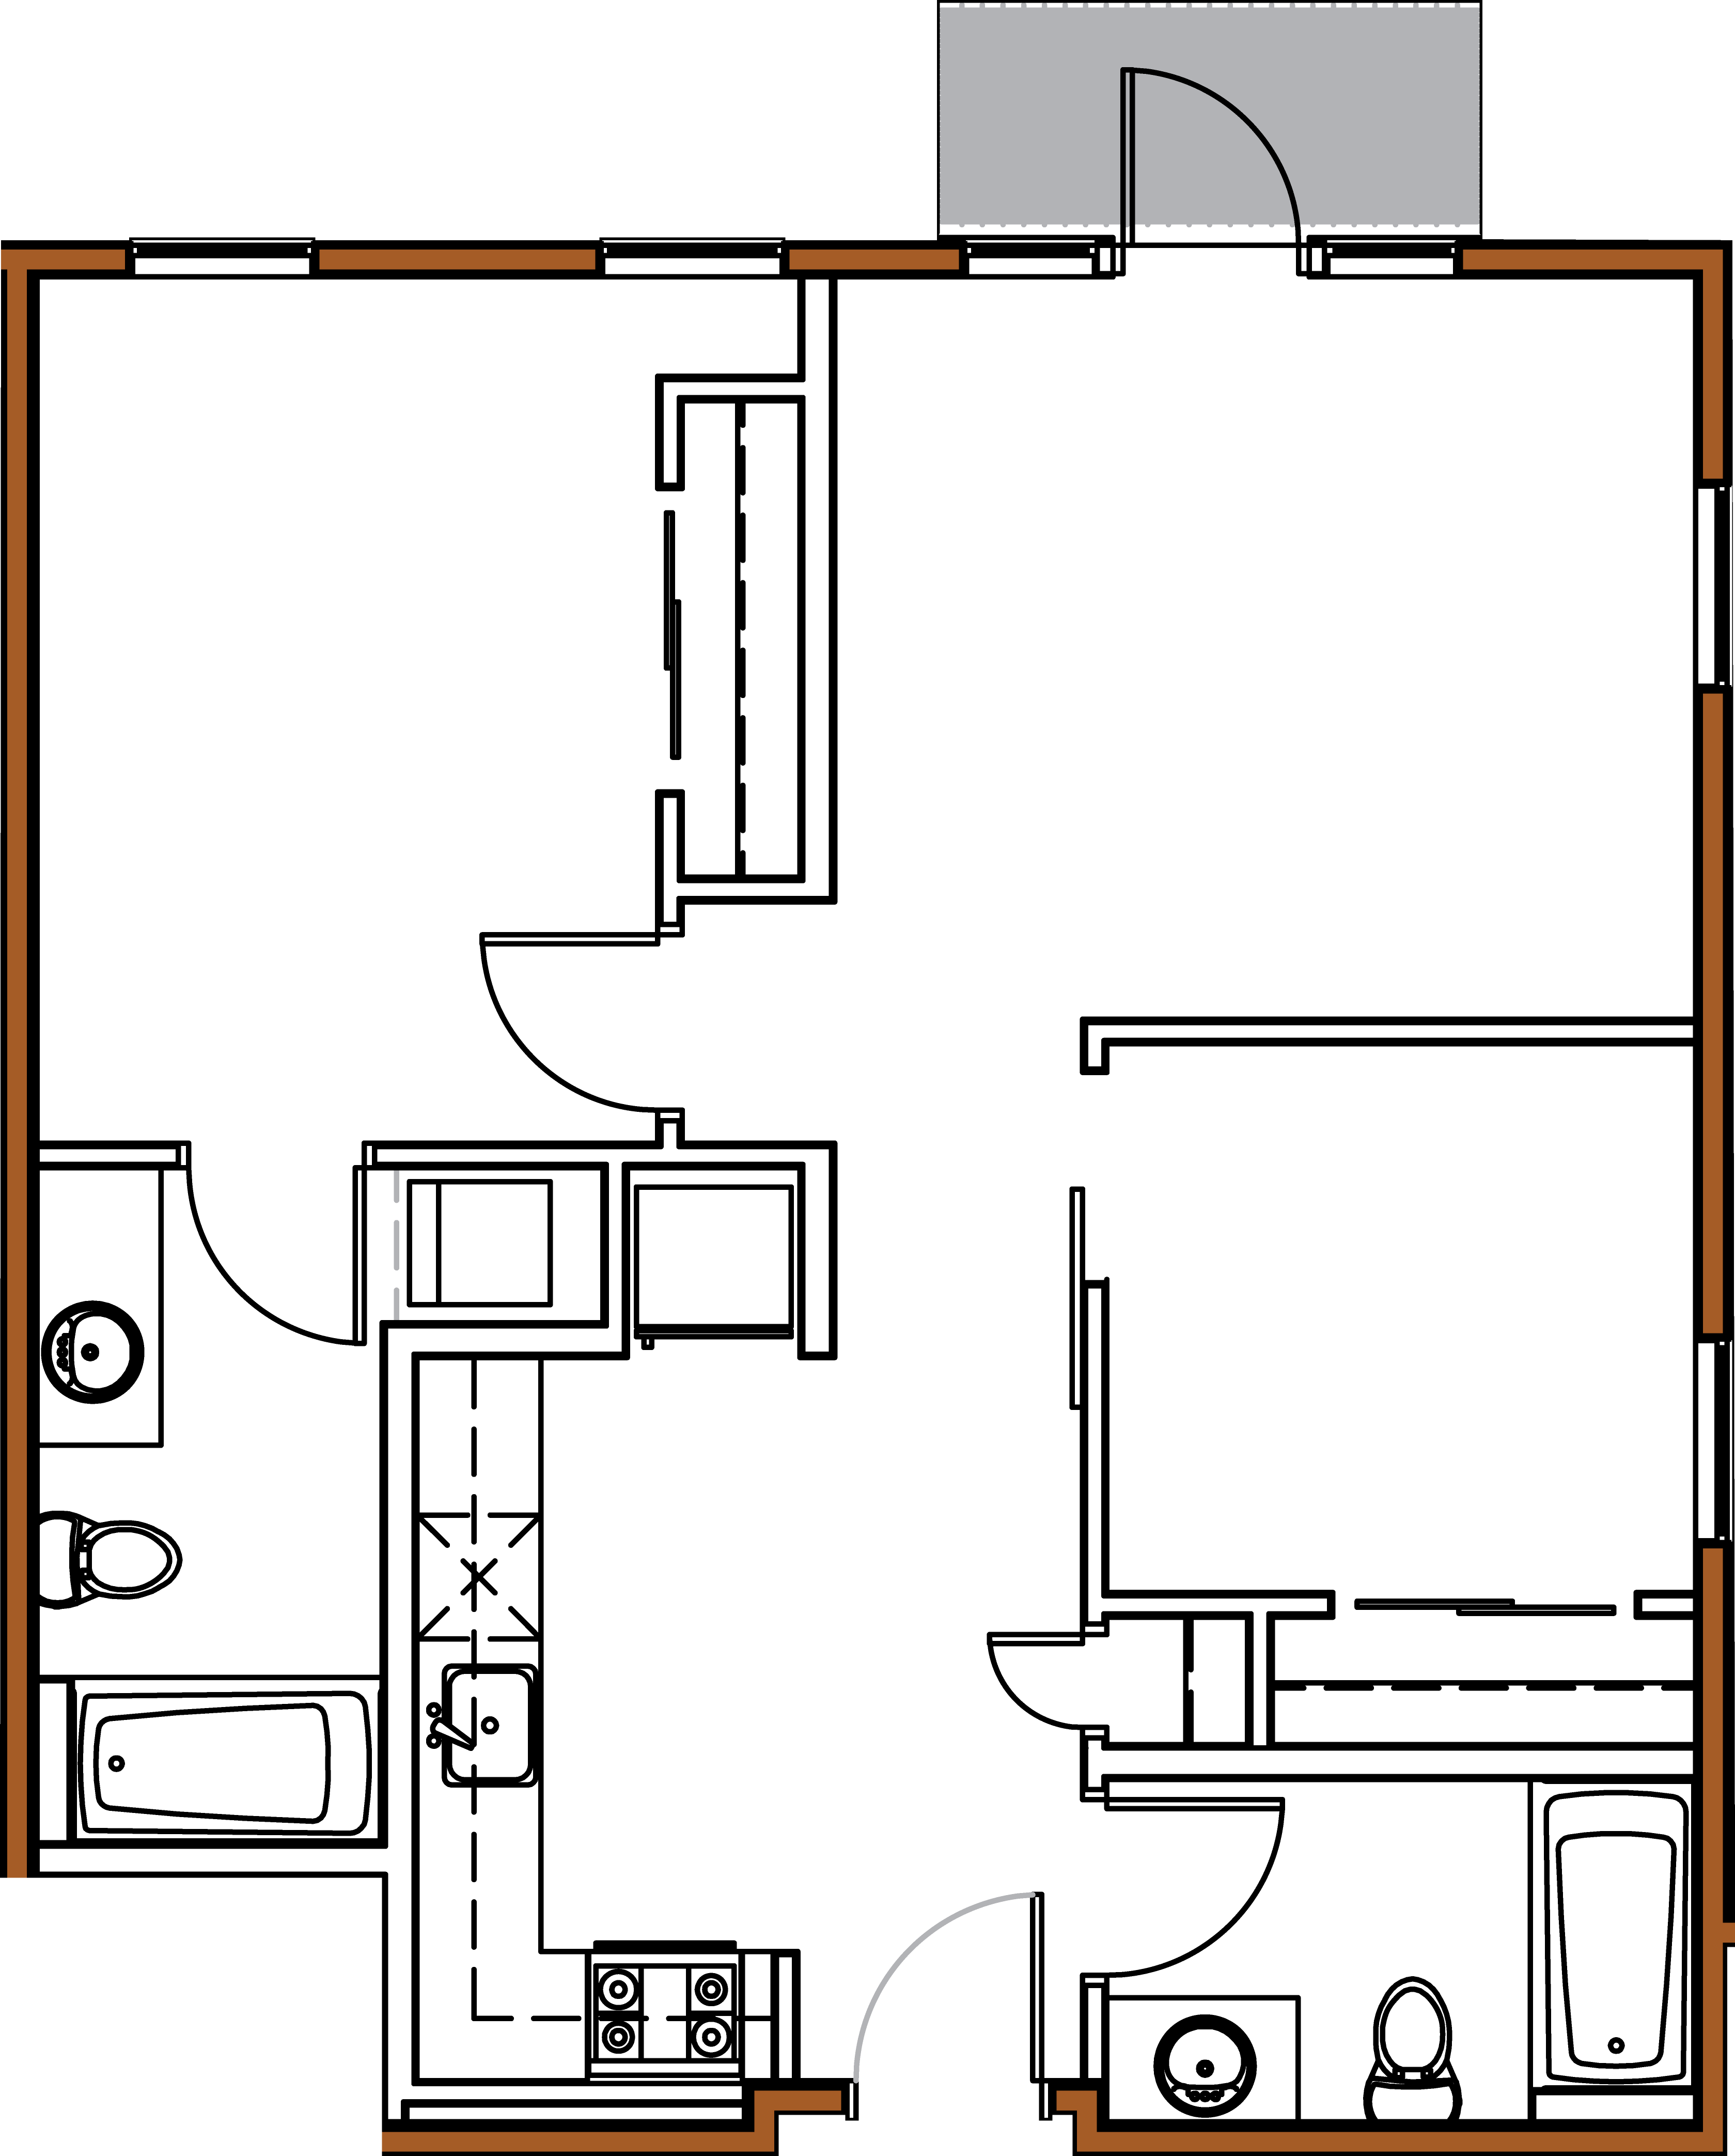 Richmond Flats, 2 Bedroom 2 Bathroom - Floorplan.png